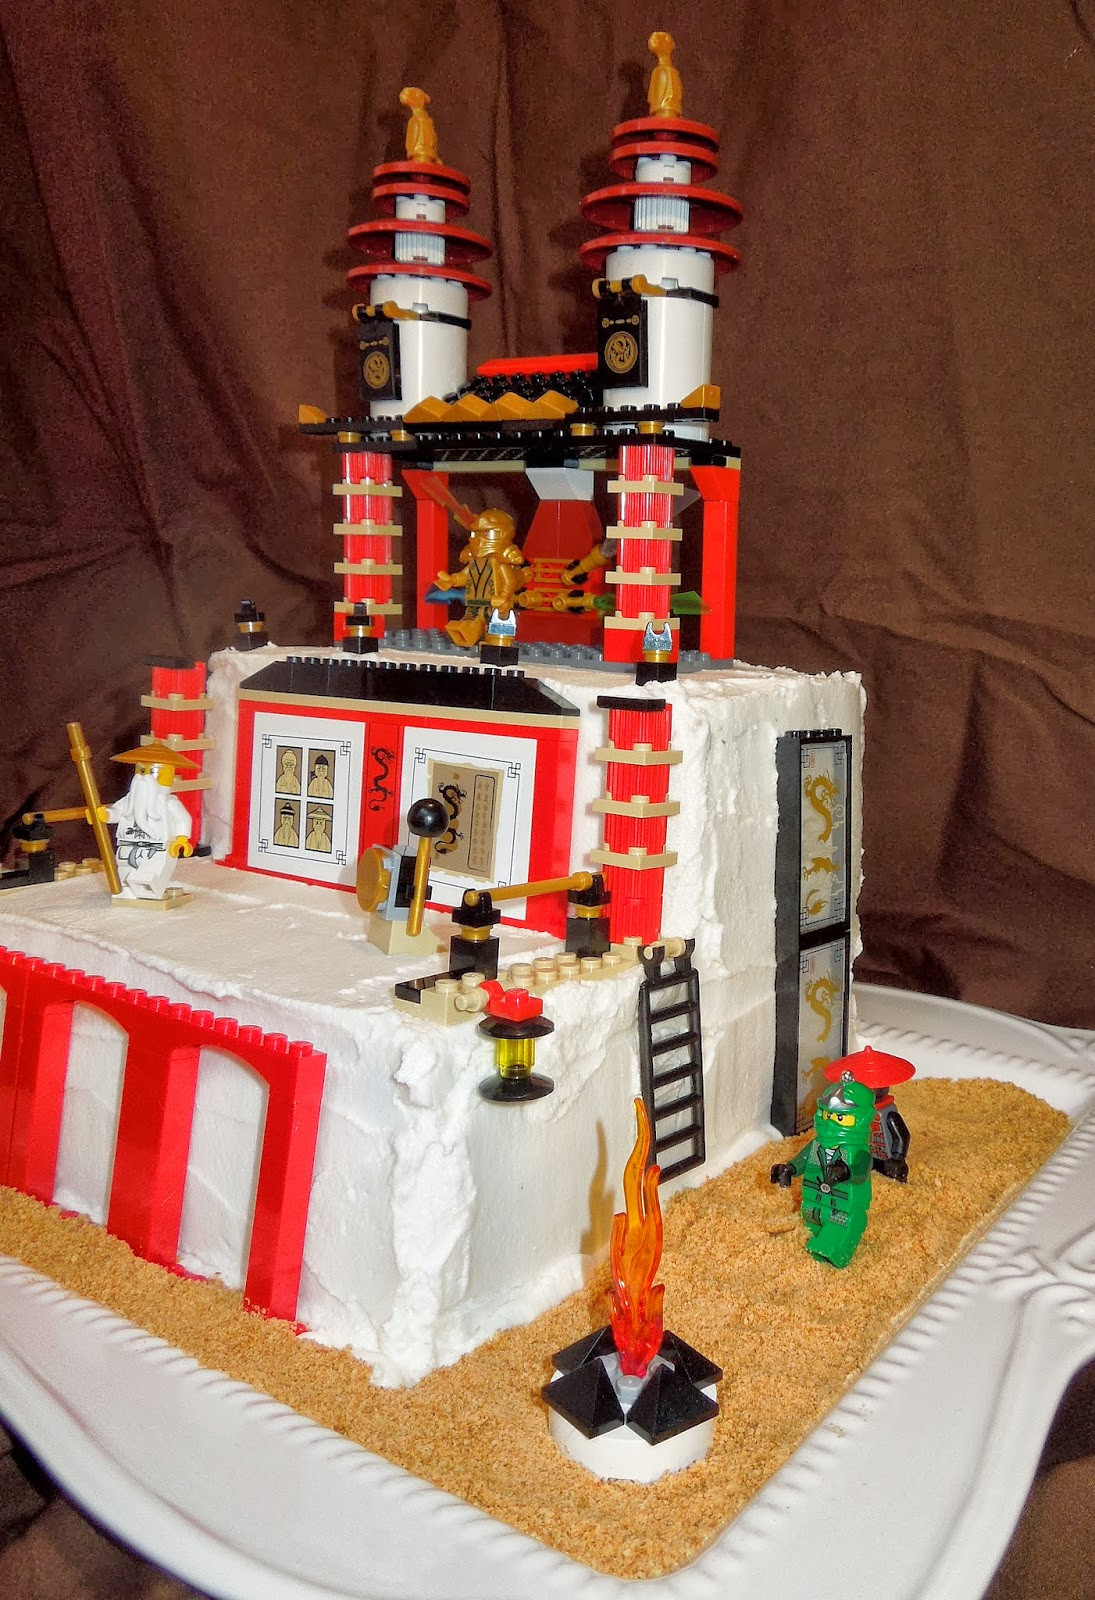 Ninjago Birthday Cake
 LEGO Ninjago Birthday Cake Gluten and Top 8 Allergy